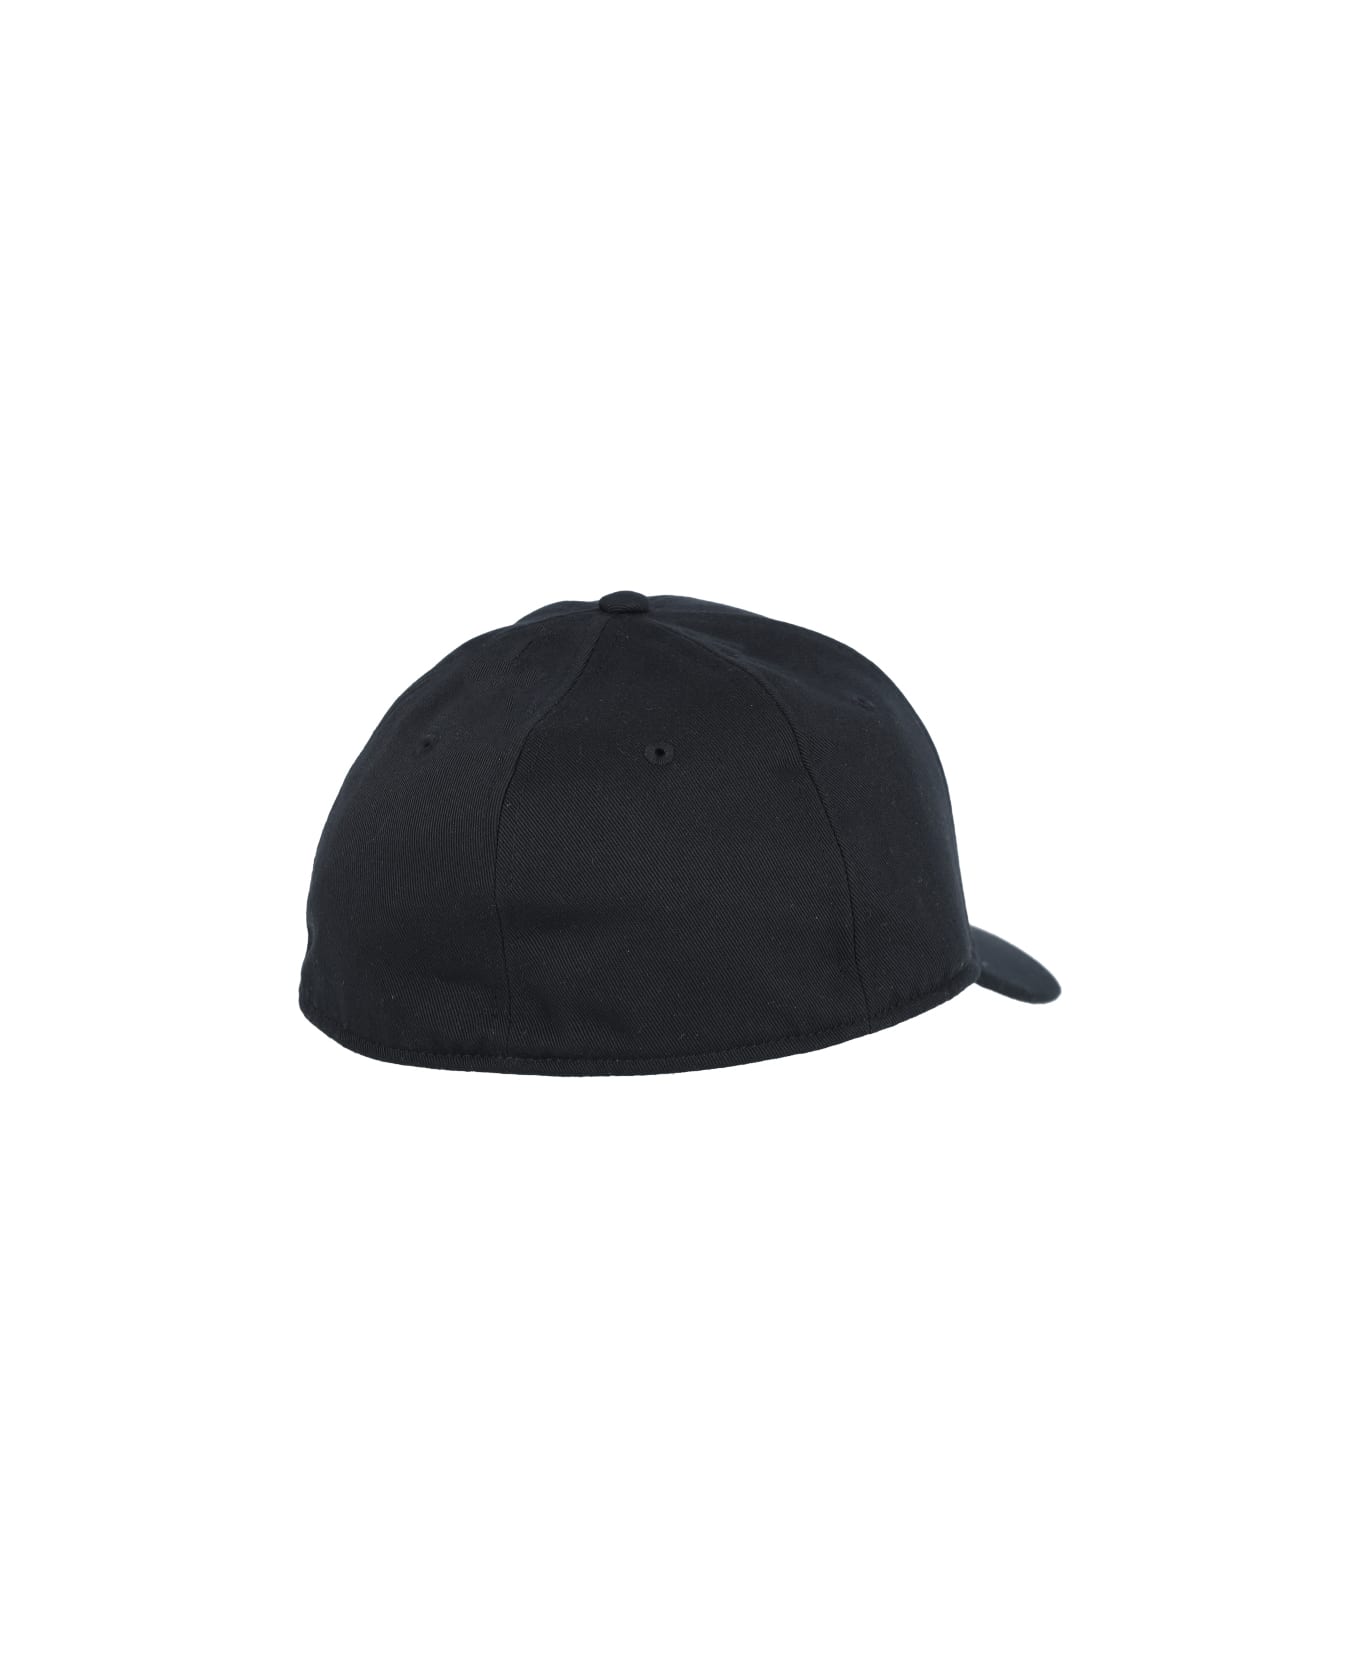 Canada Goose Tonal Hat - Black 帽子